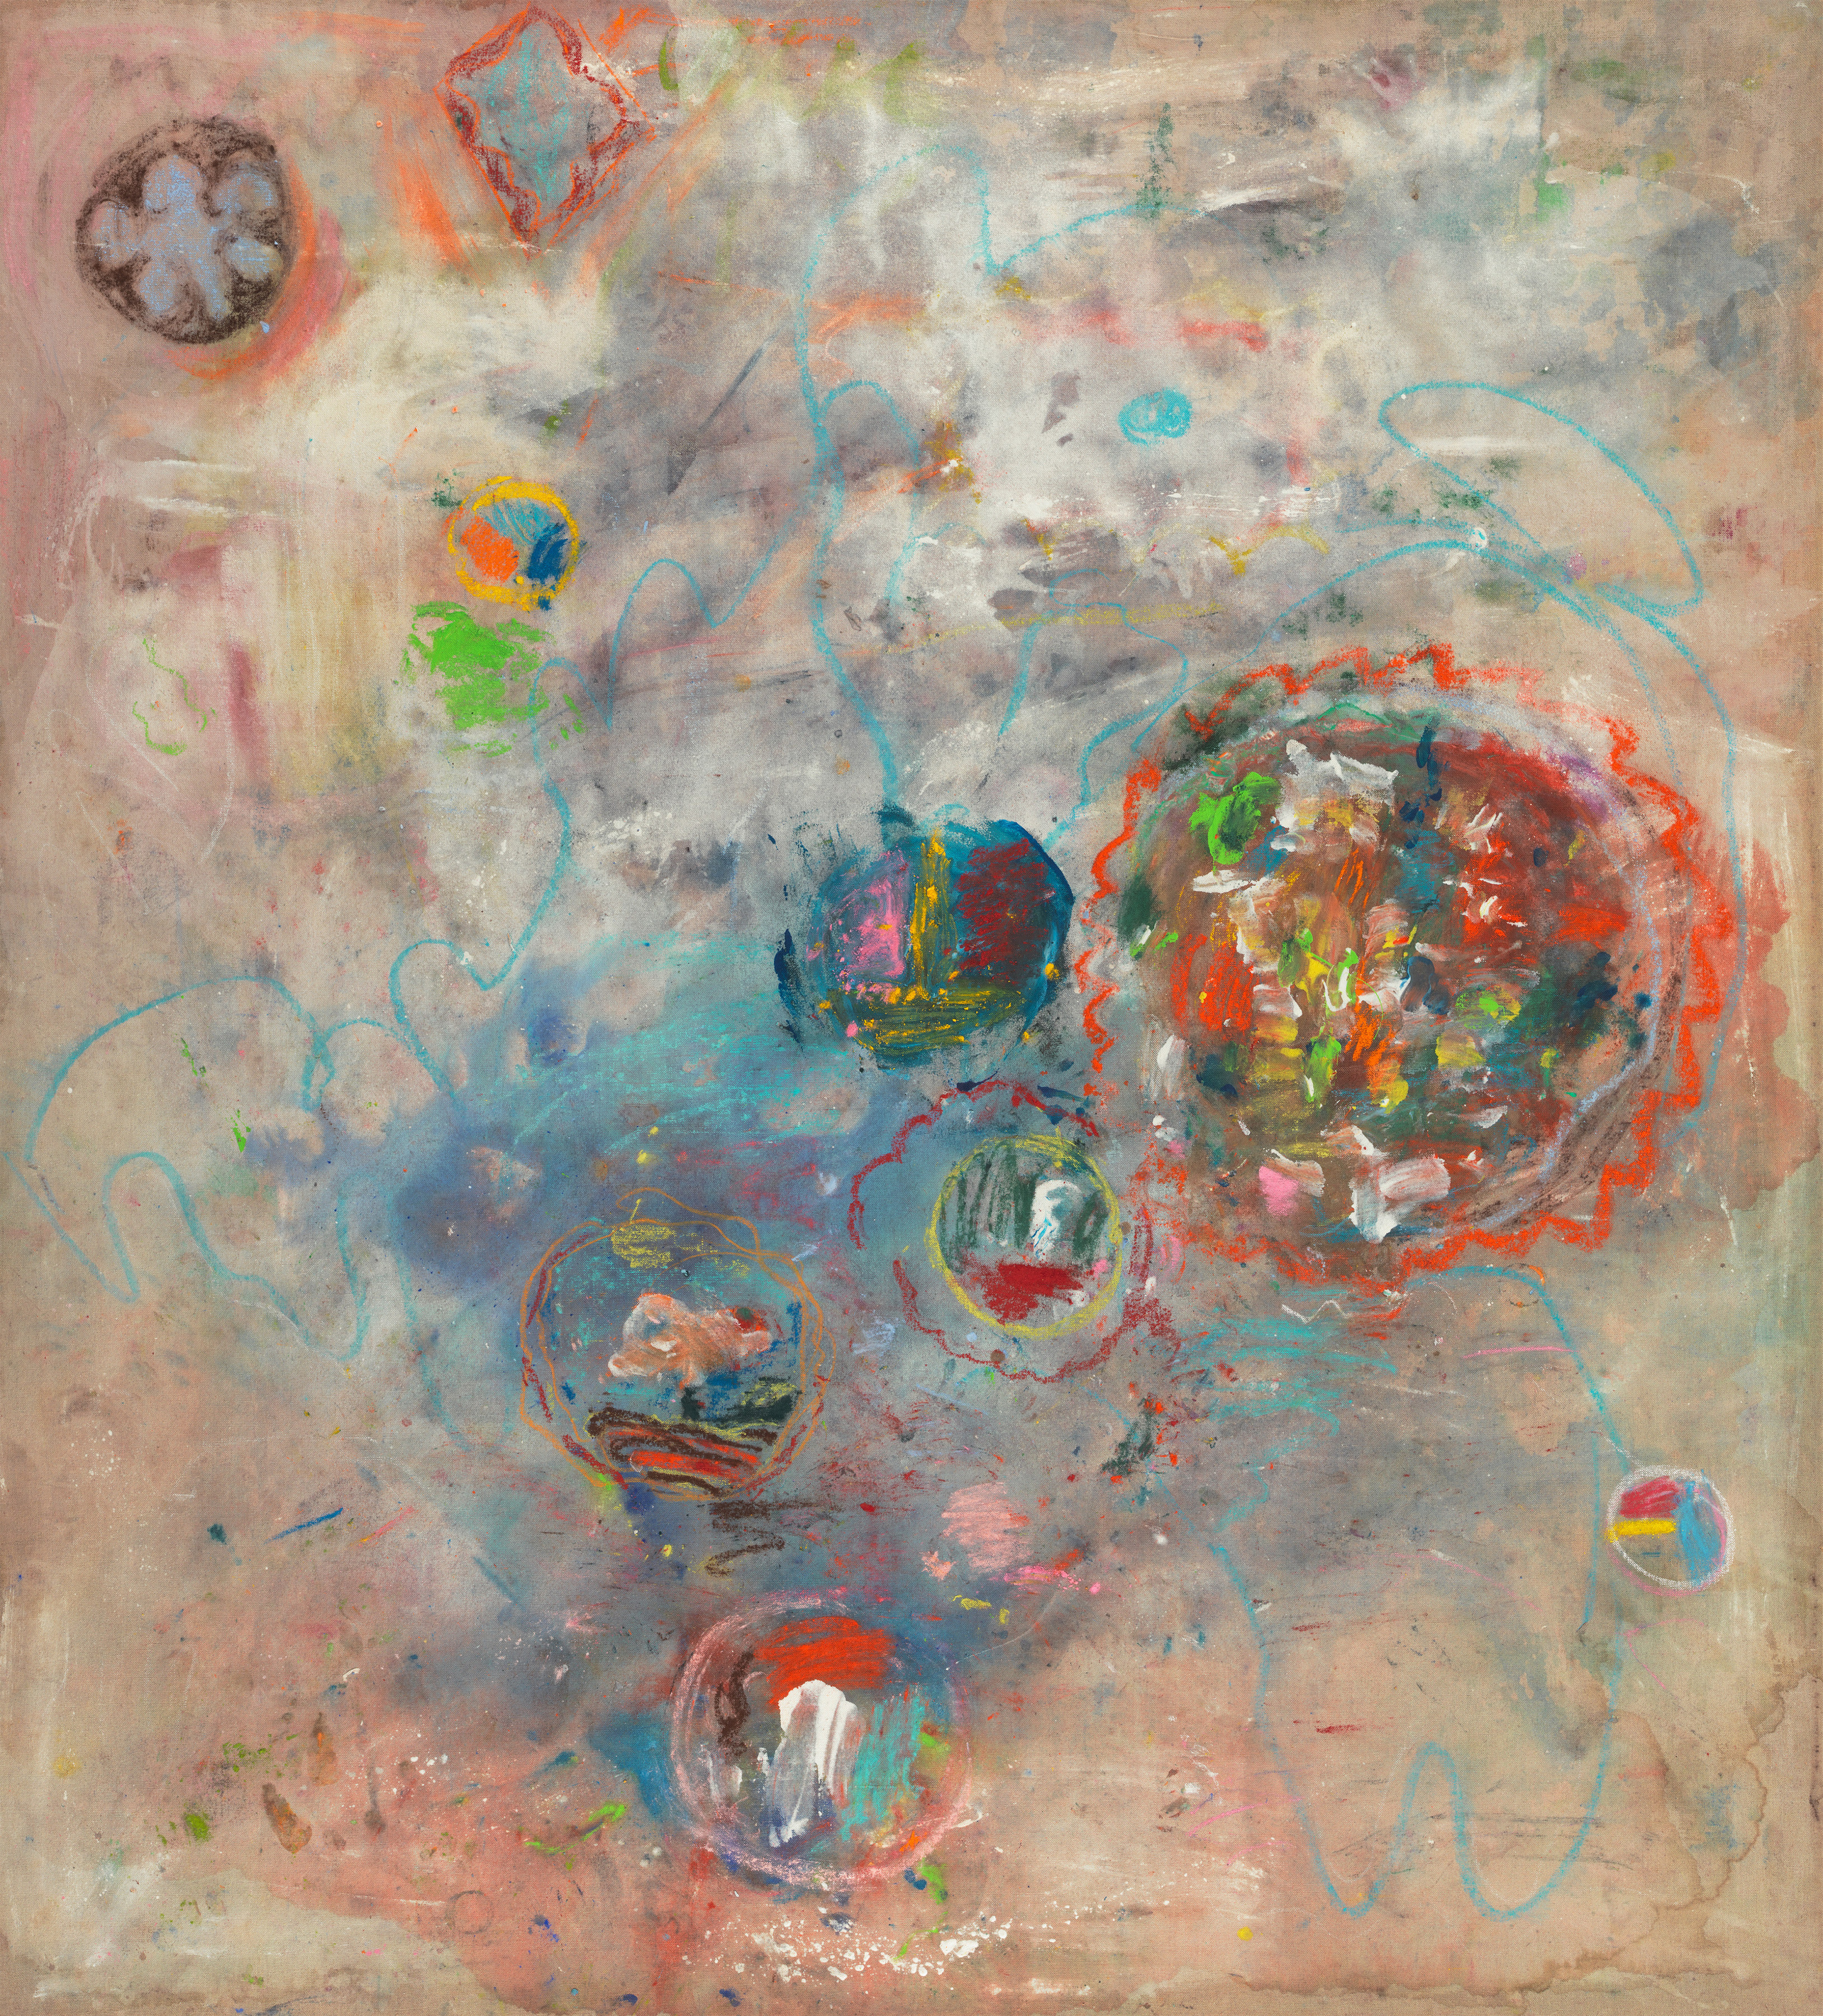 Bild, 2004, Pigment and pastel on canvas